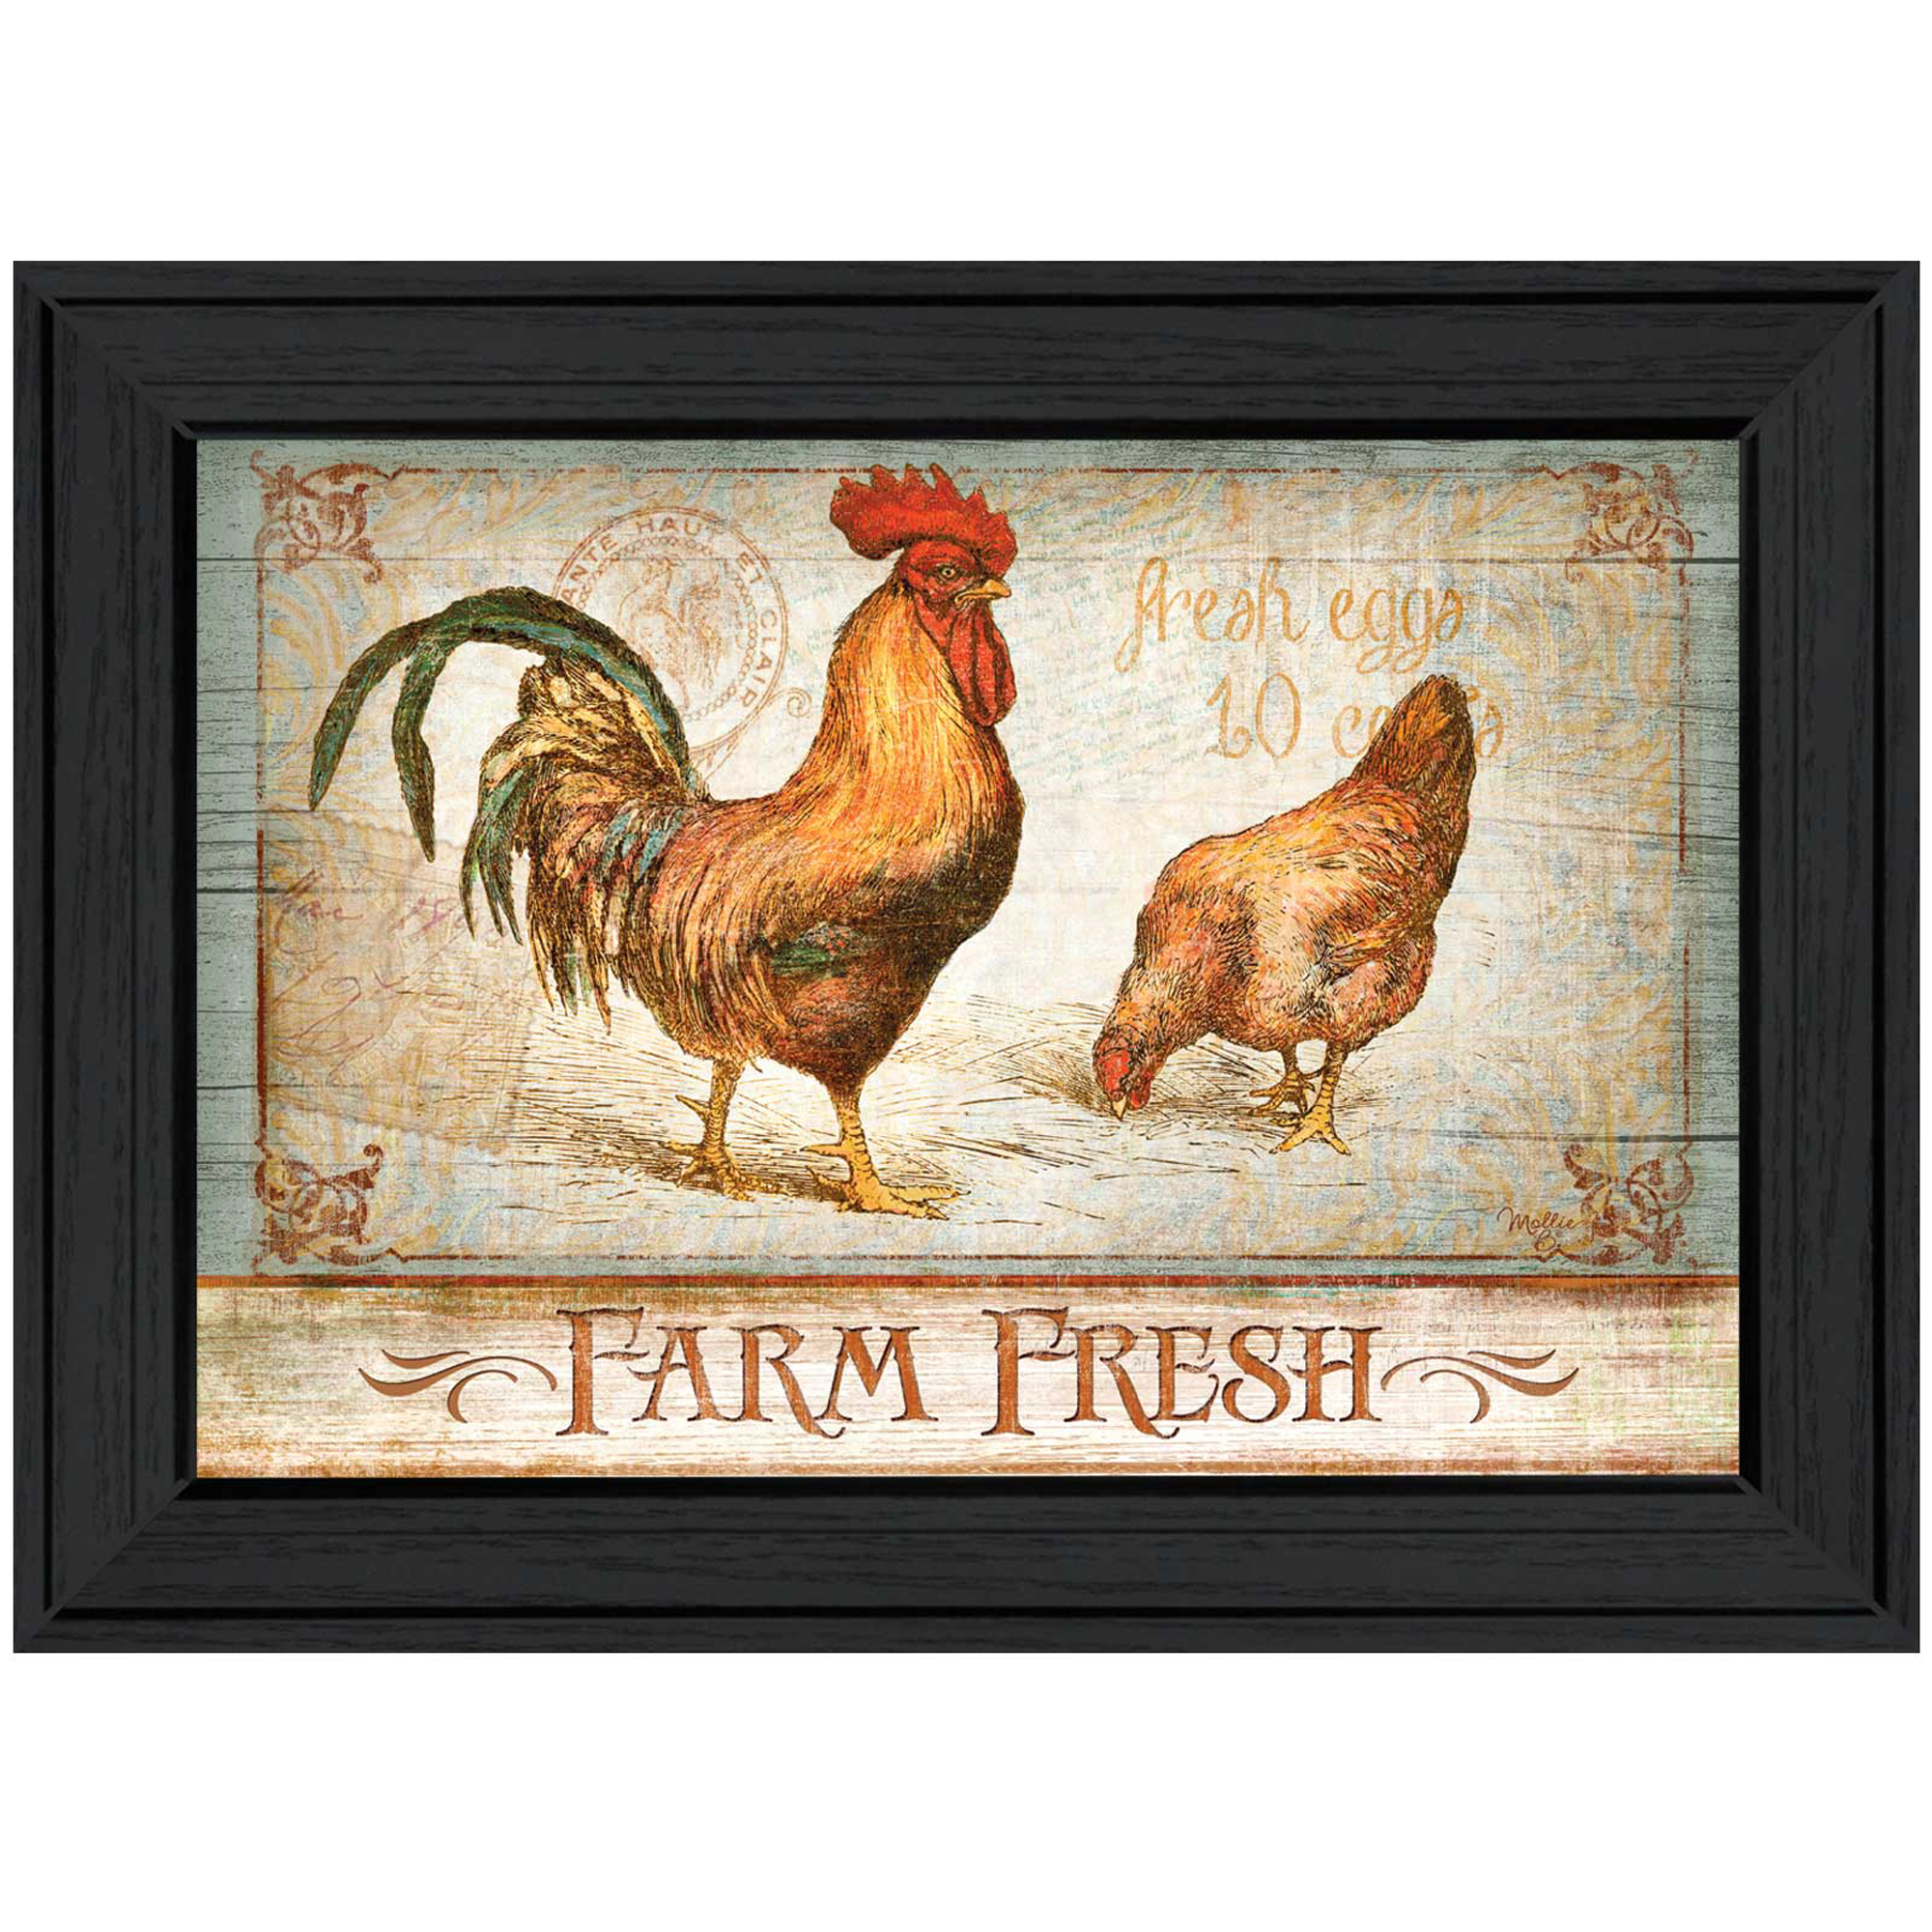 "Farm Fresh" By Mollie B., Printed Wall Art, Ready To Hang Framed Poster, Black Frame